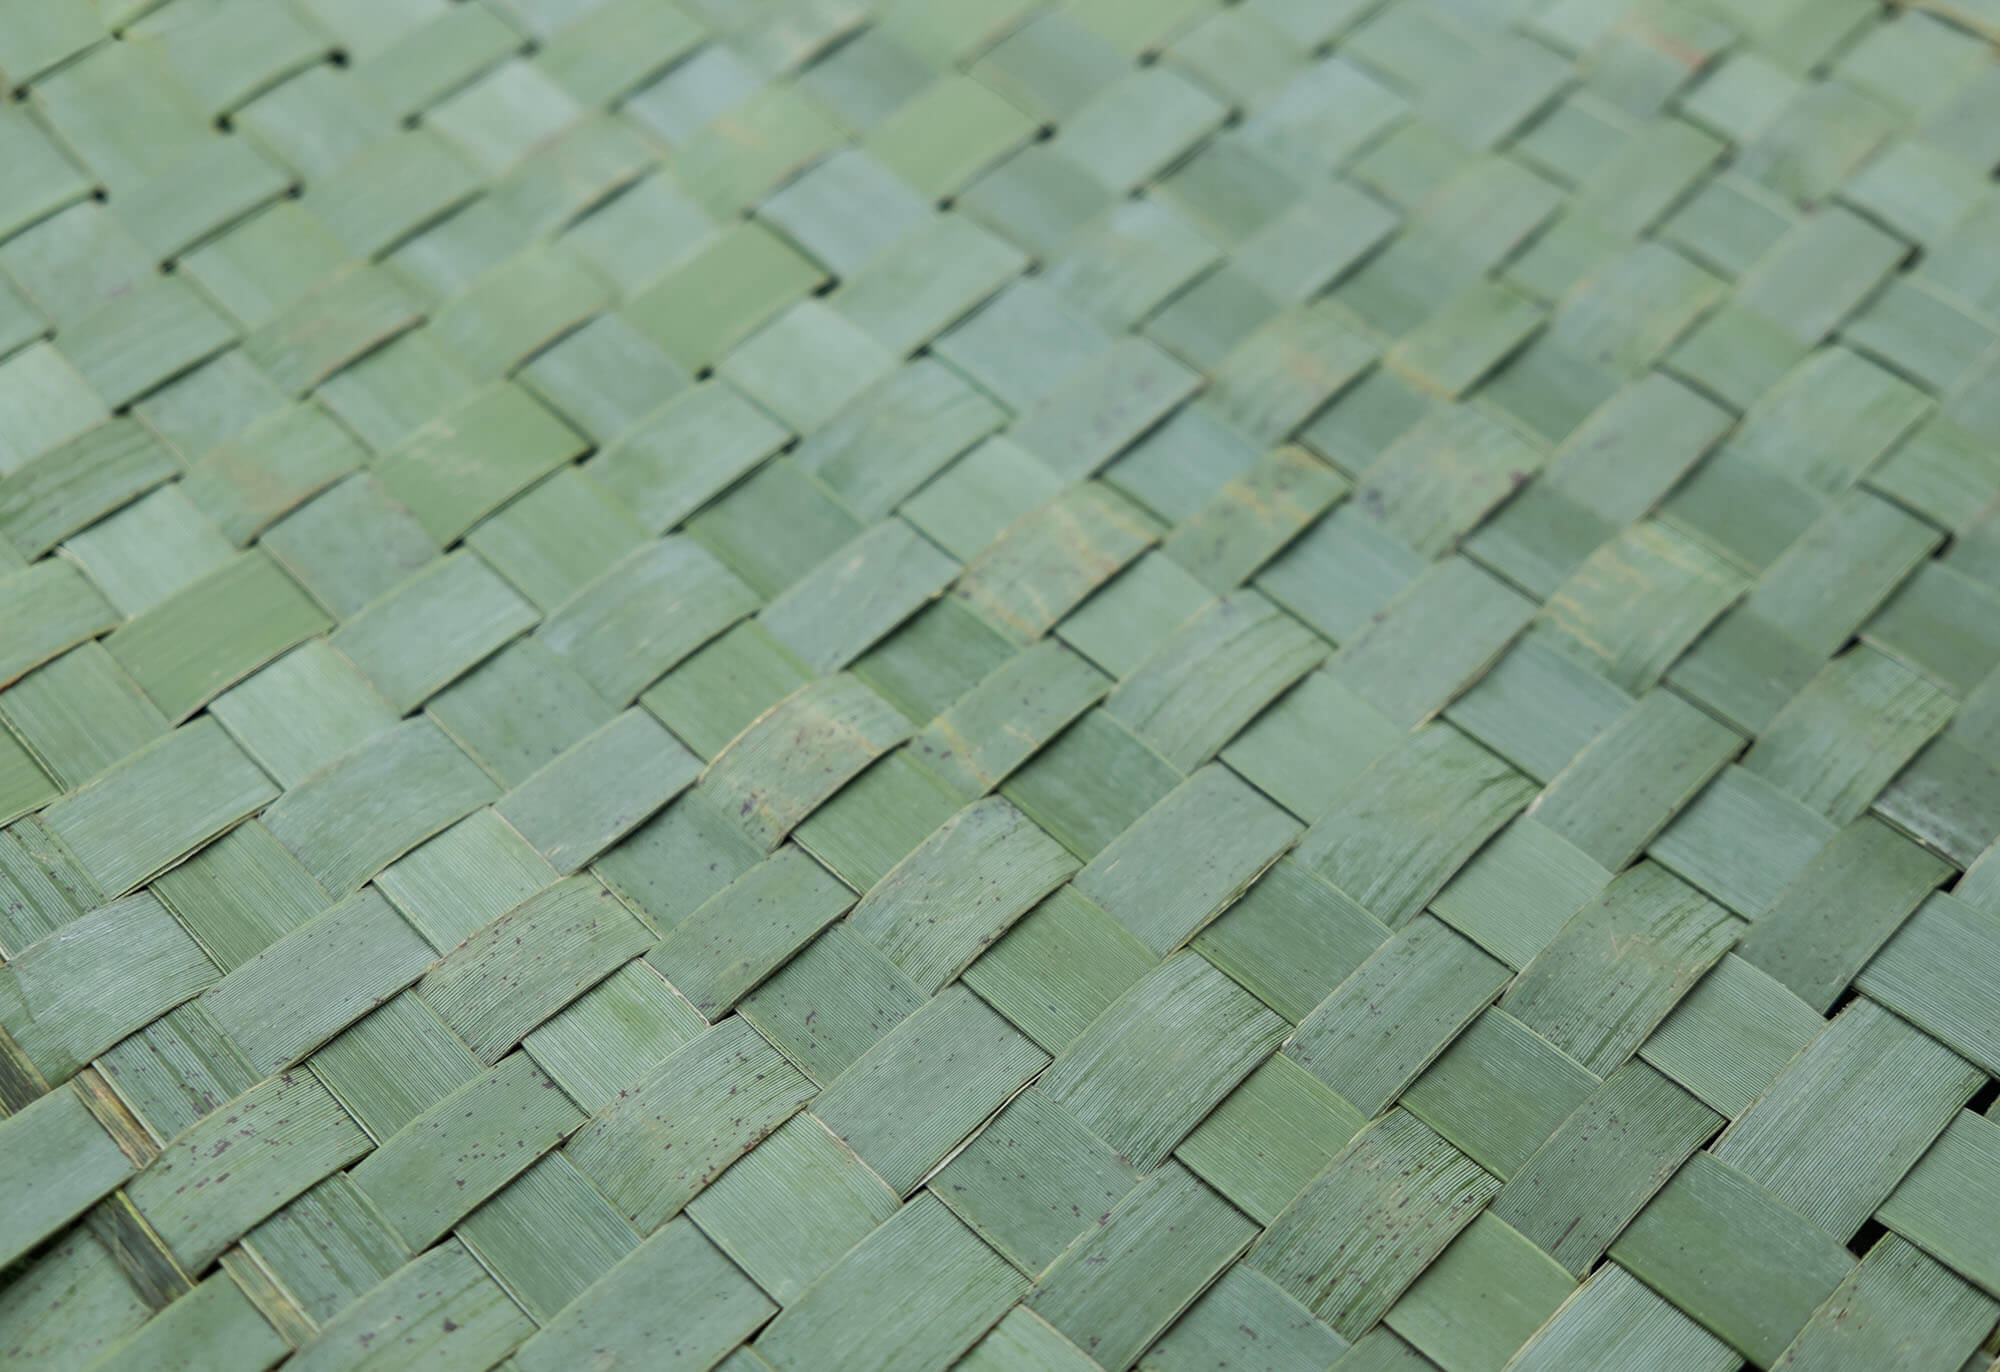 New Zealand flax (Harakeke) woven into fabric